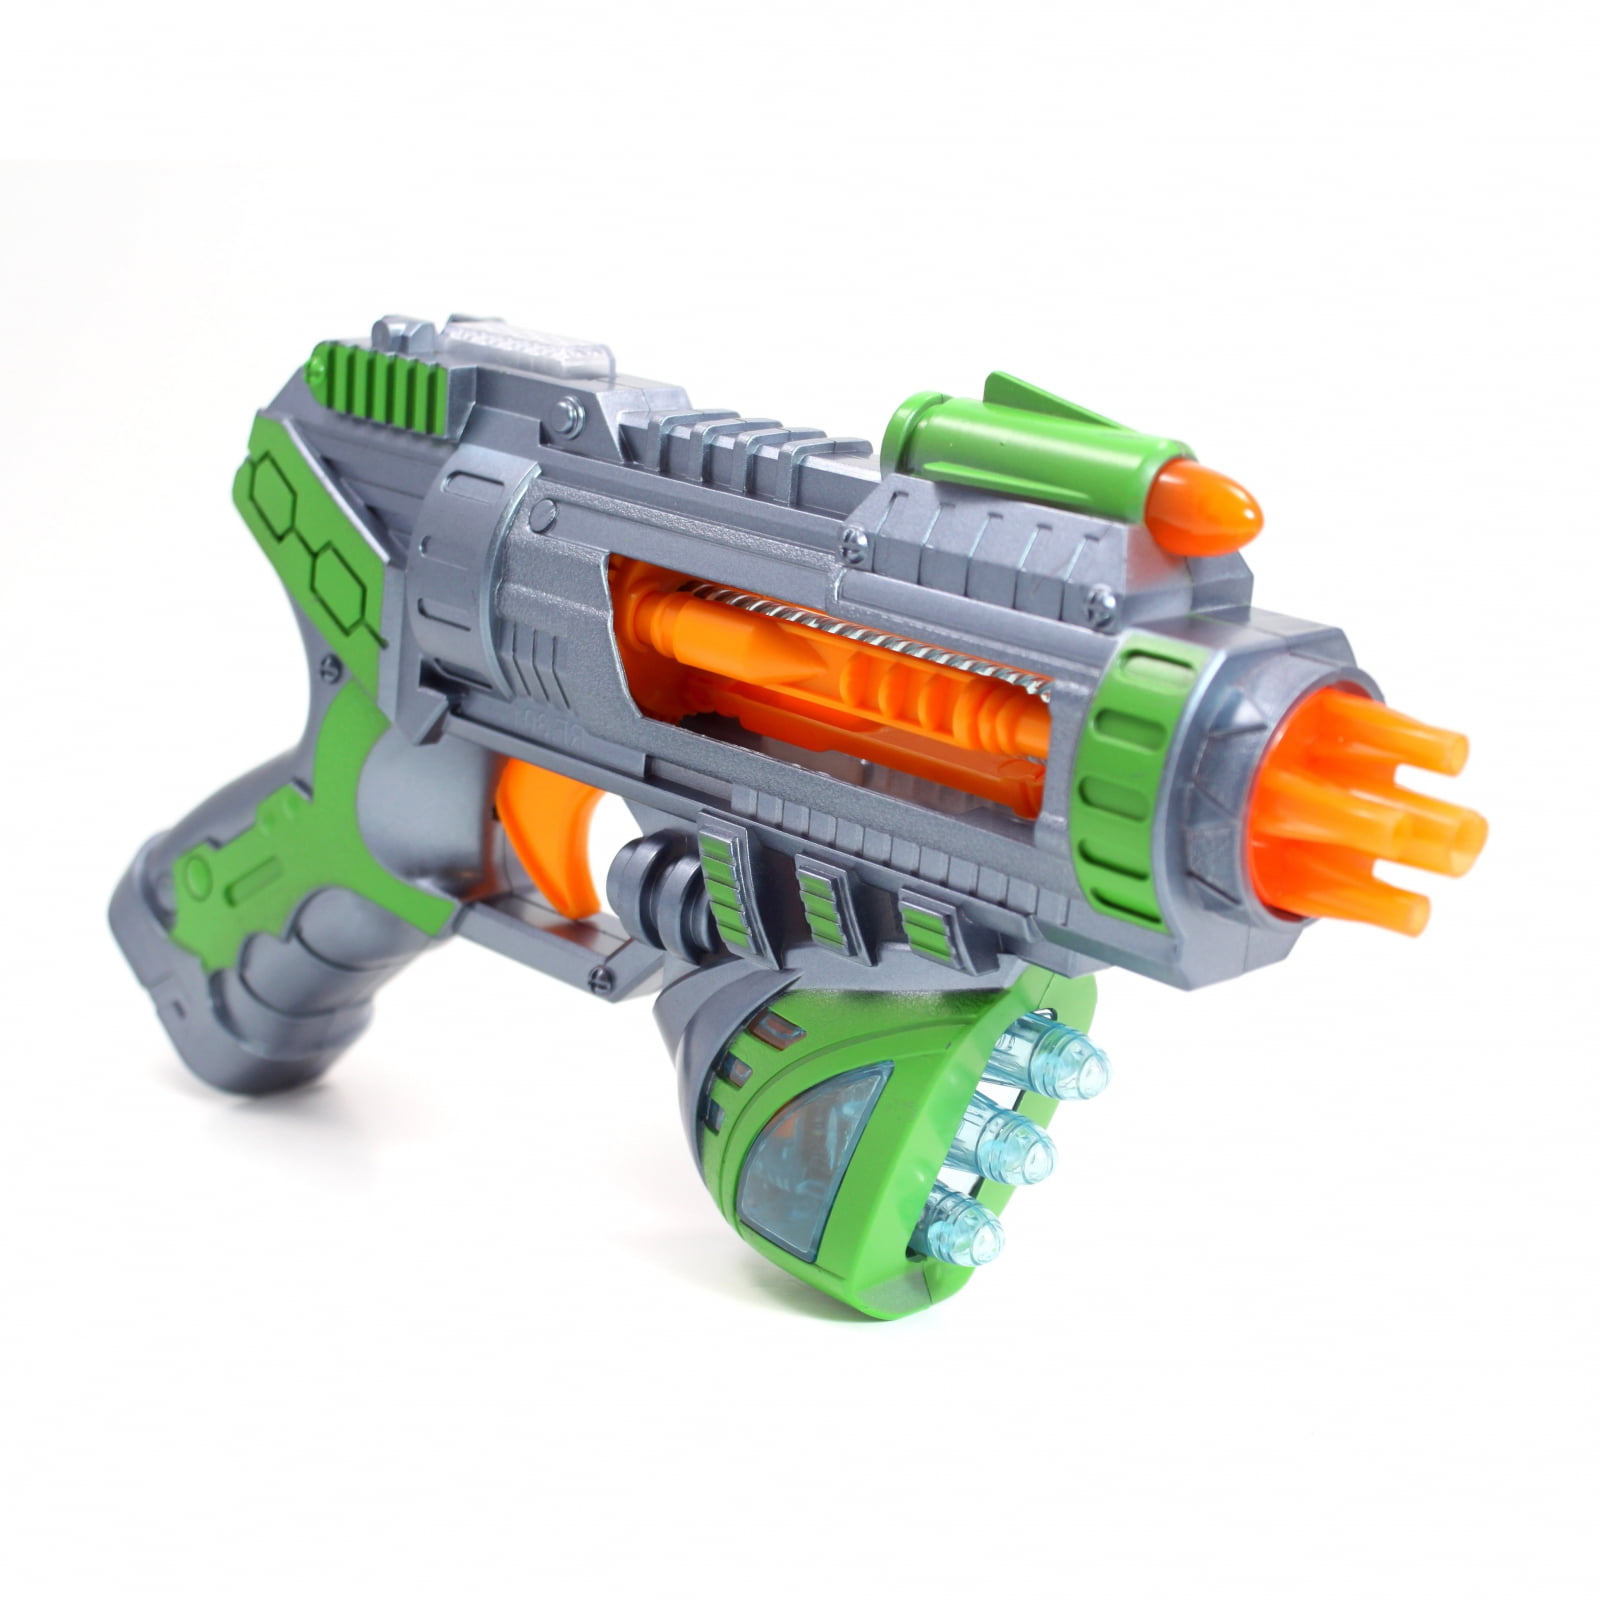 Lego mini figure 1 White blaster gun space gun weapon scanner tool 